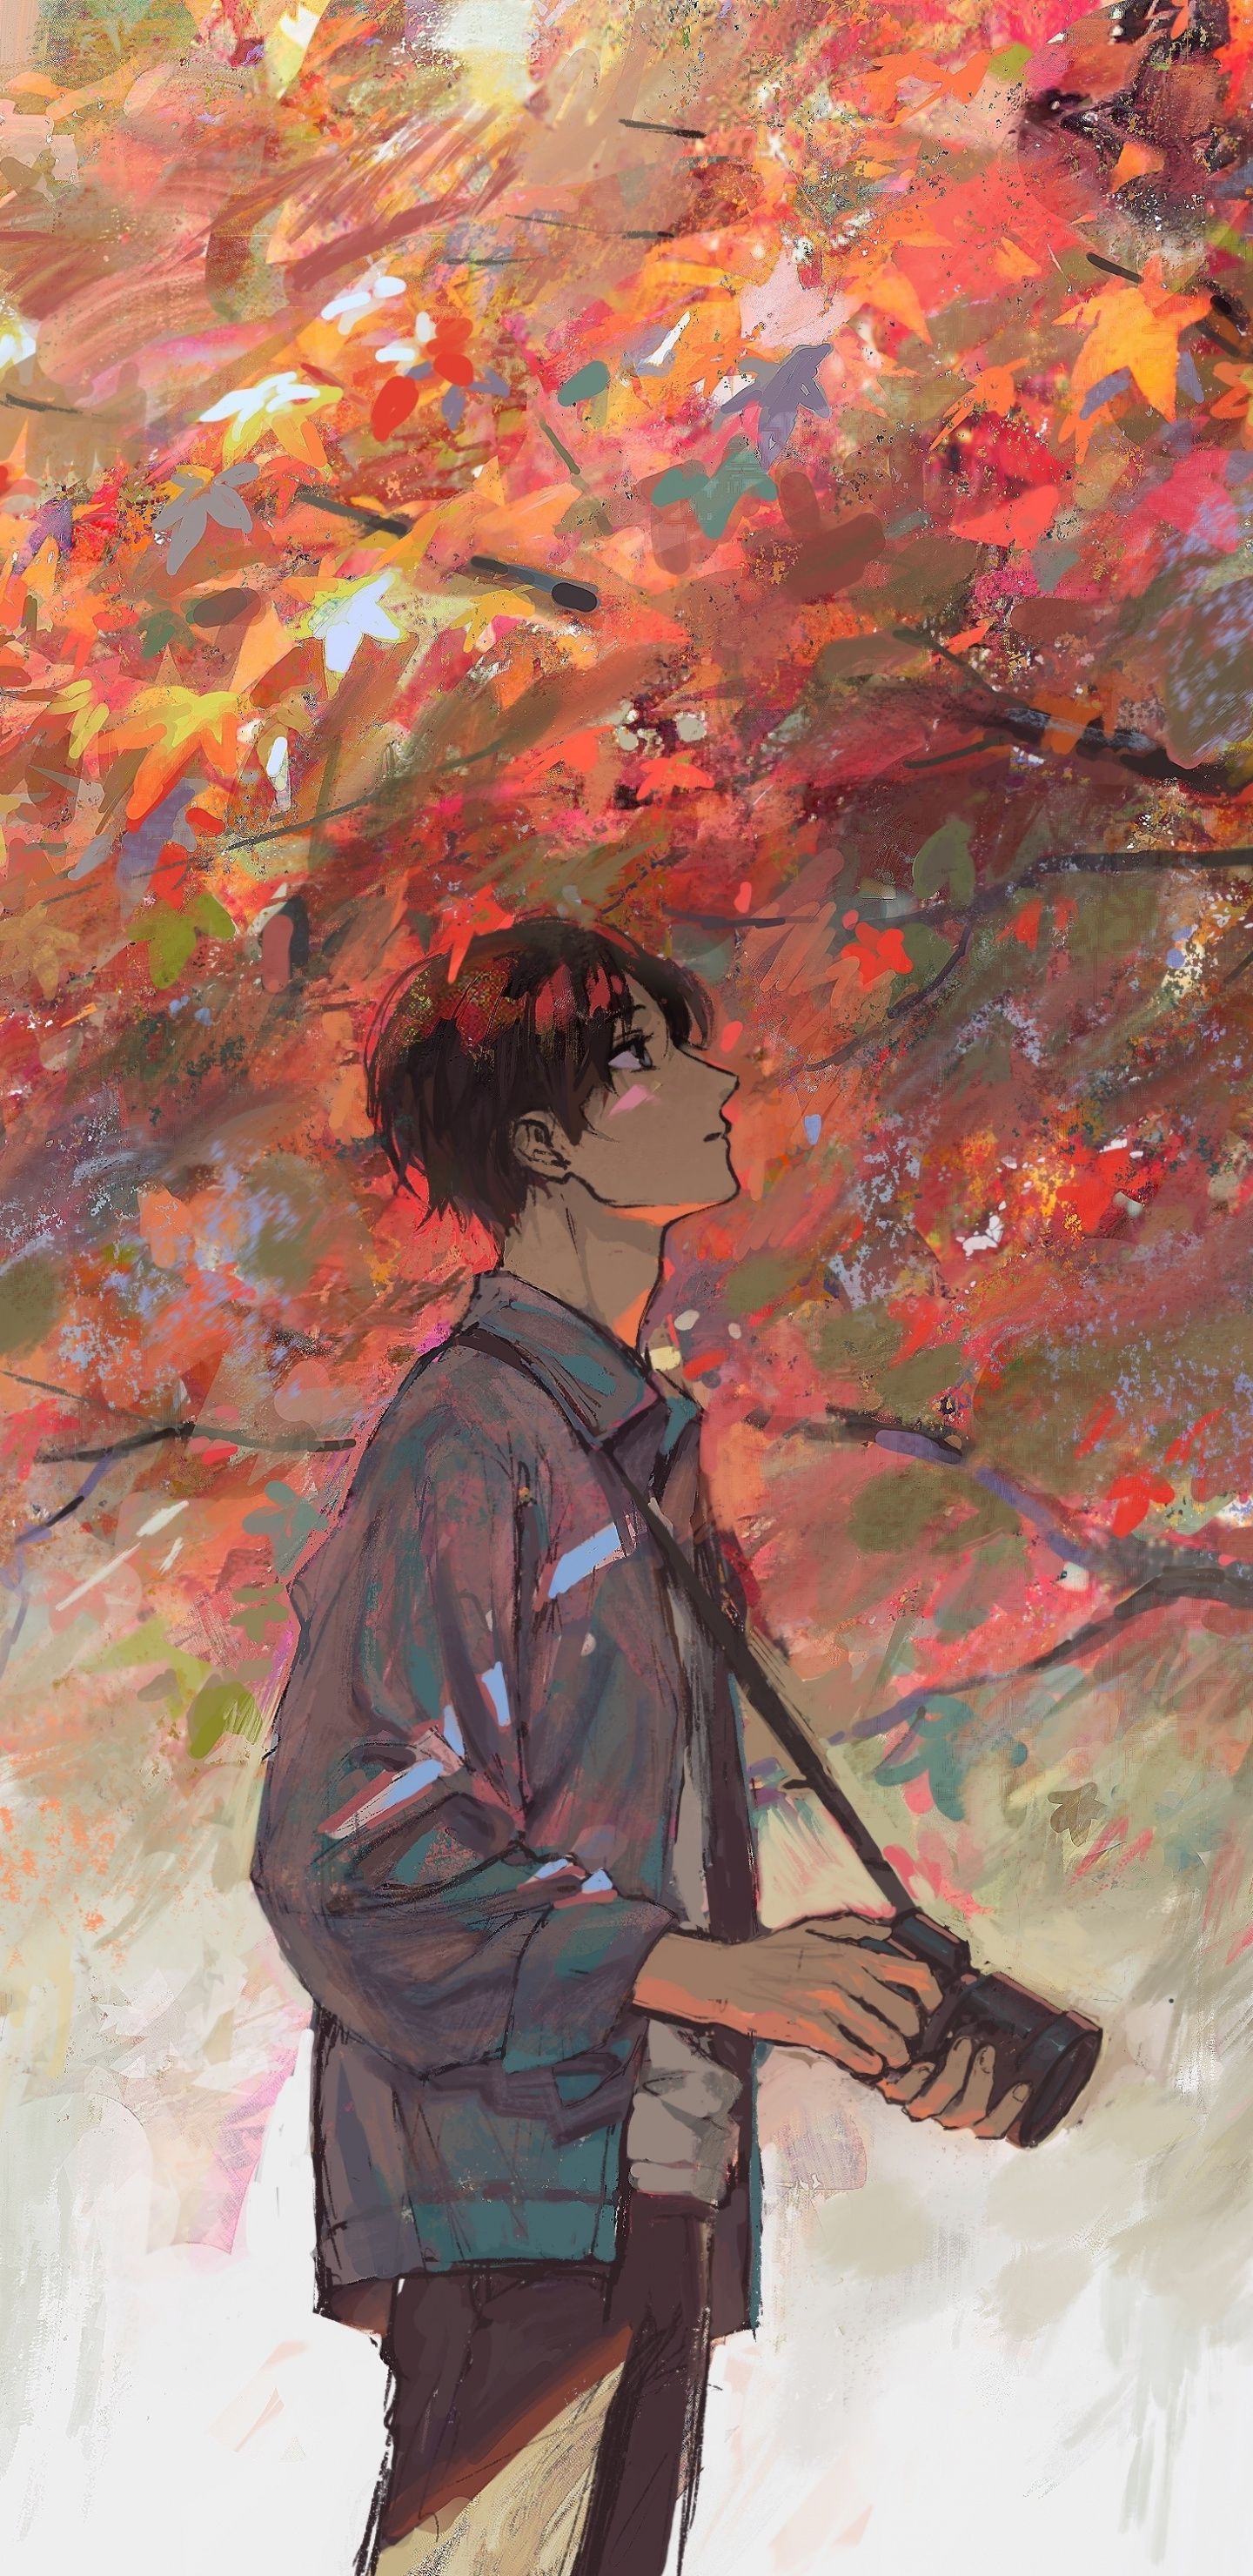 Anime boy, autumn, tree, artwork, 1440x2960 wallpaper #autumnwallpaper Anime boy, autumn, tr. Anime artwork wallpaper, Anime scenery, Anime background wallpaper